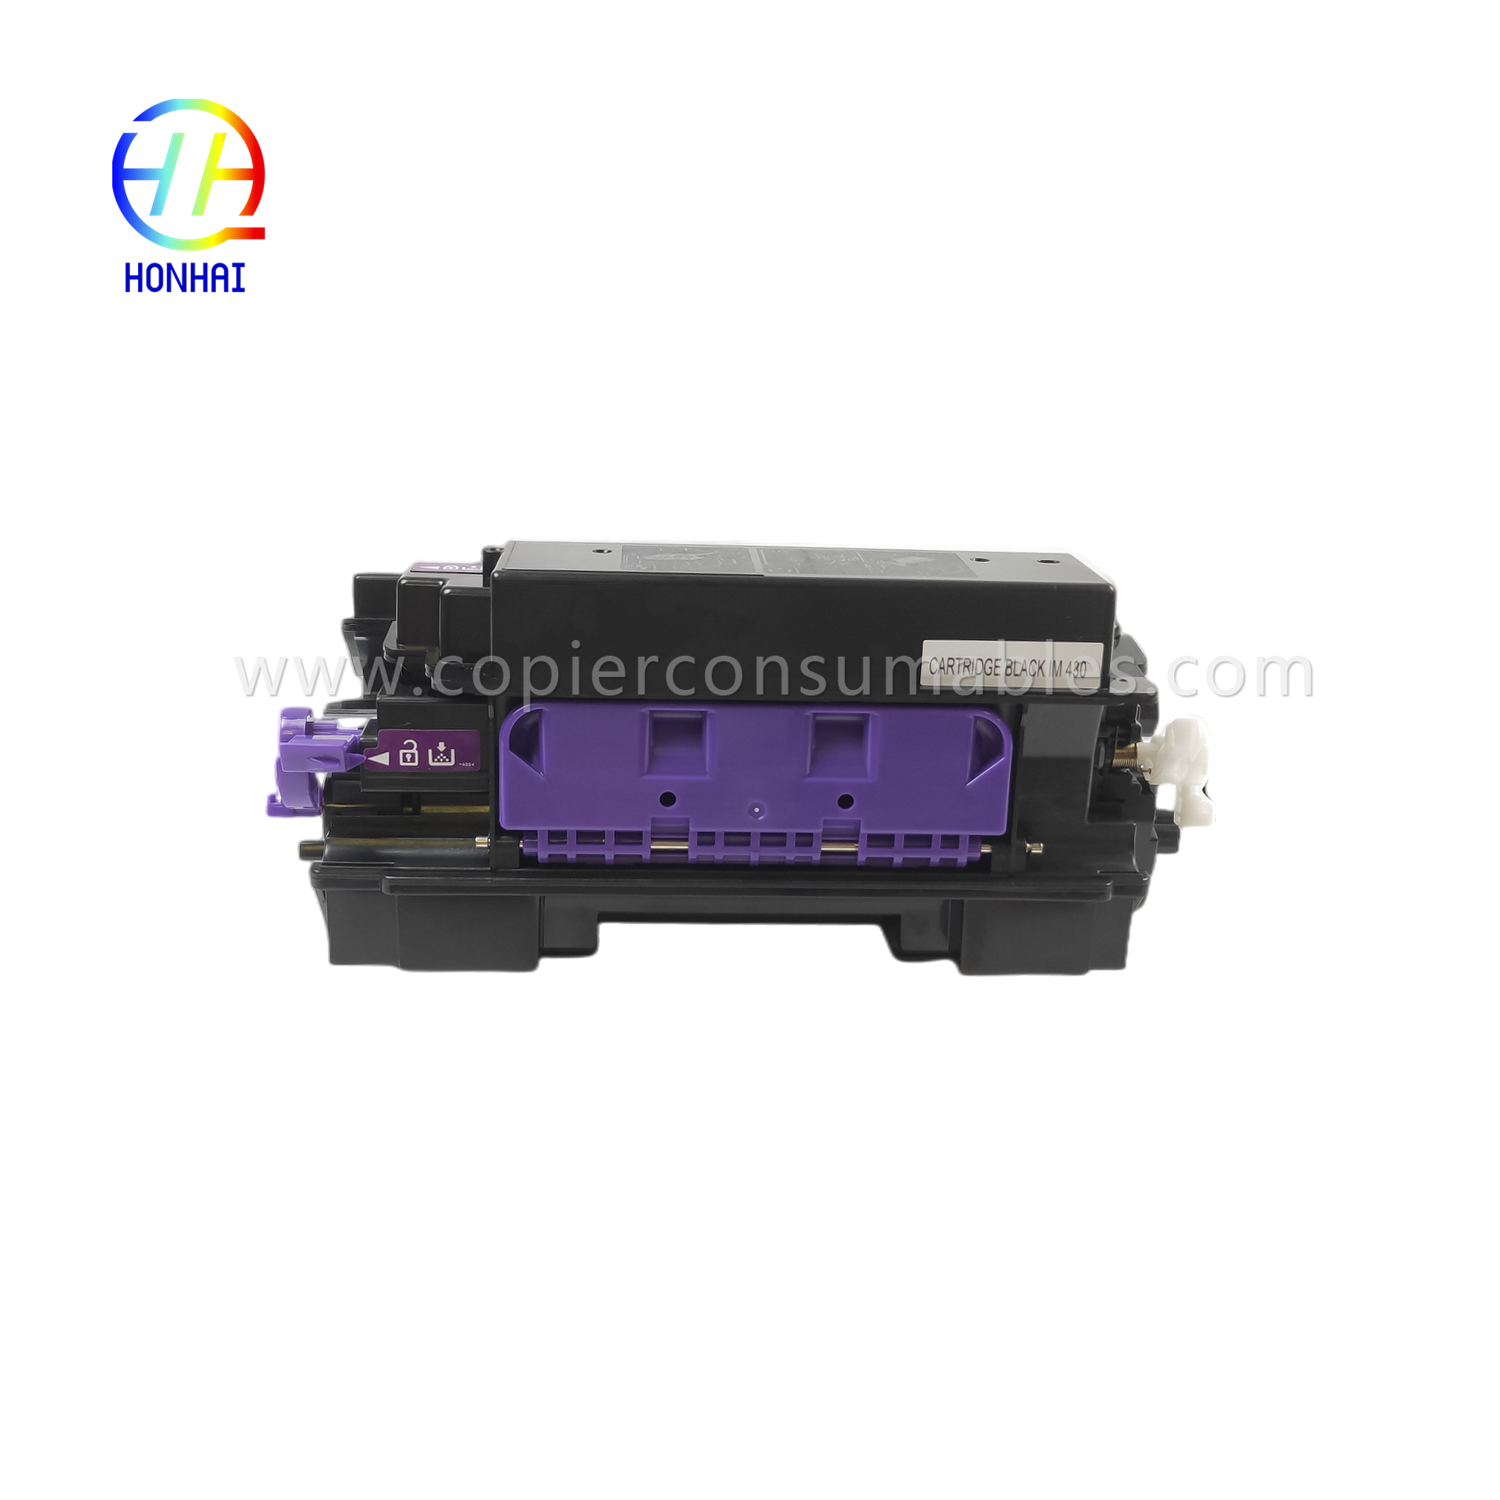 https://www.copierconsumables.com/toner-cartridge-black-for-ricoh-418127-im430-im430f-im430fb-product/